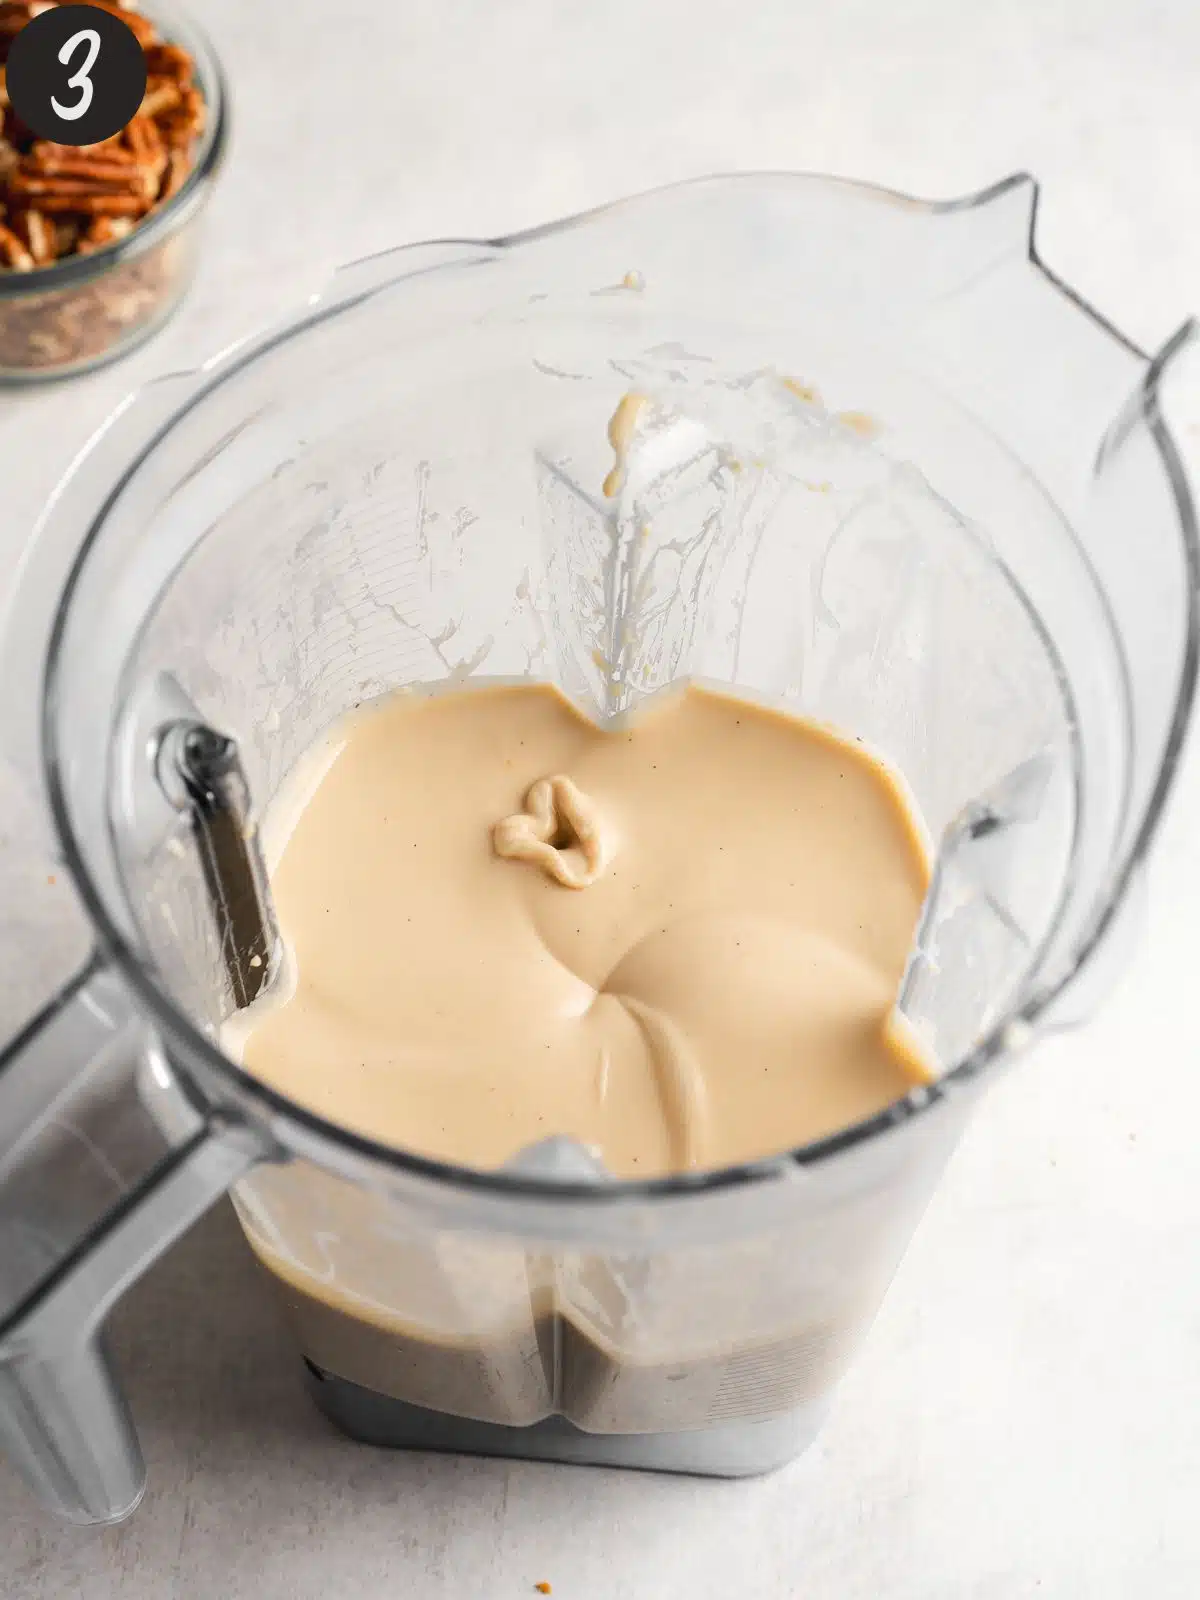 pecan cheesecake filling blended in a blender jug.